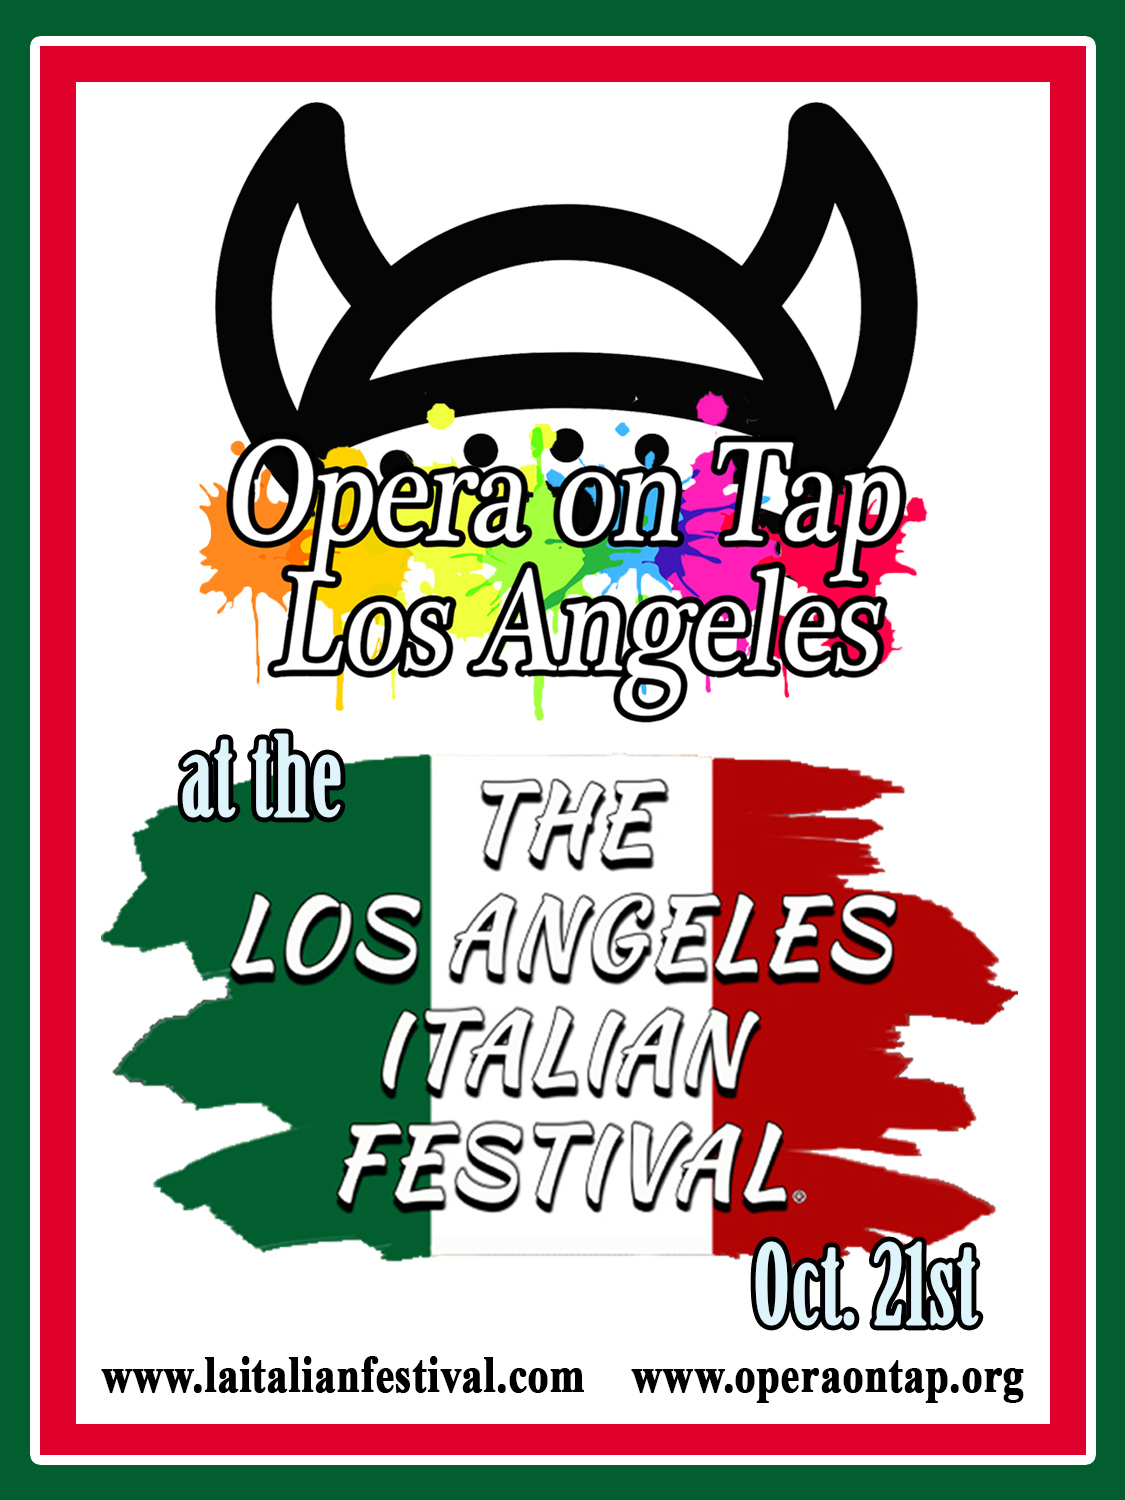 OOT LA and the Los Angeles Italian Festival